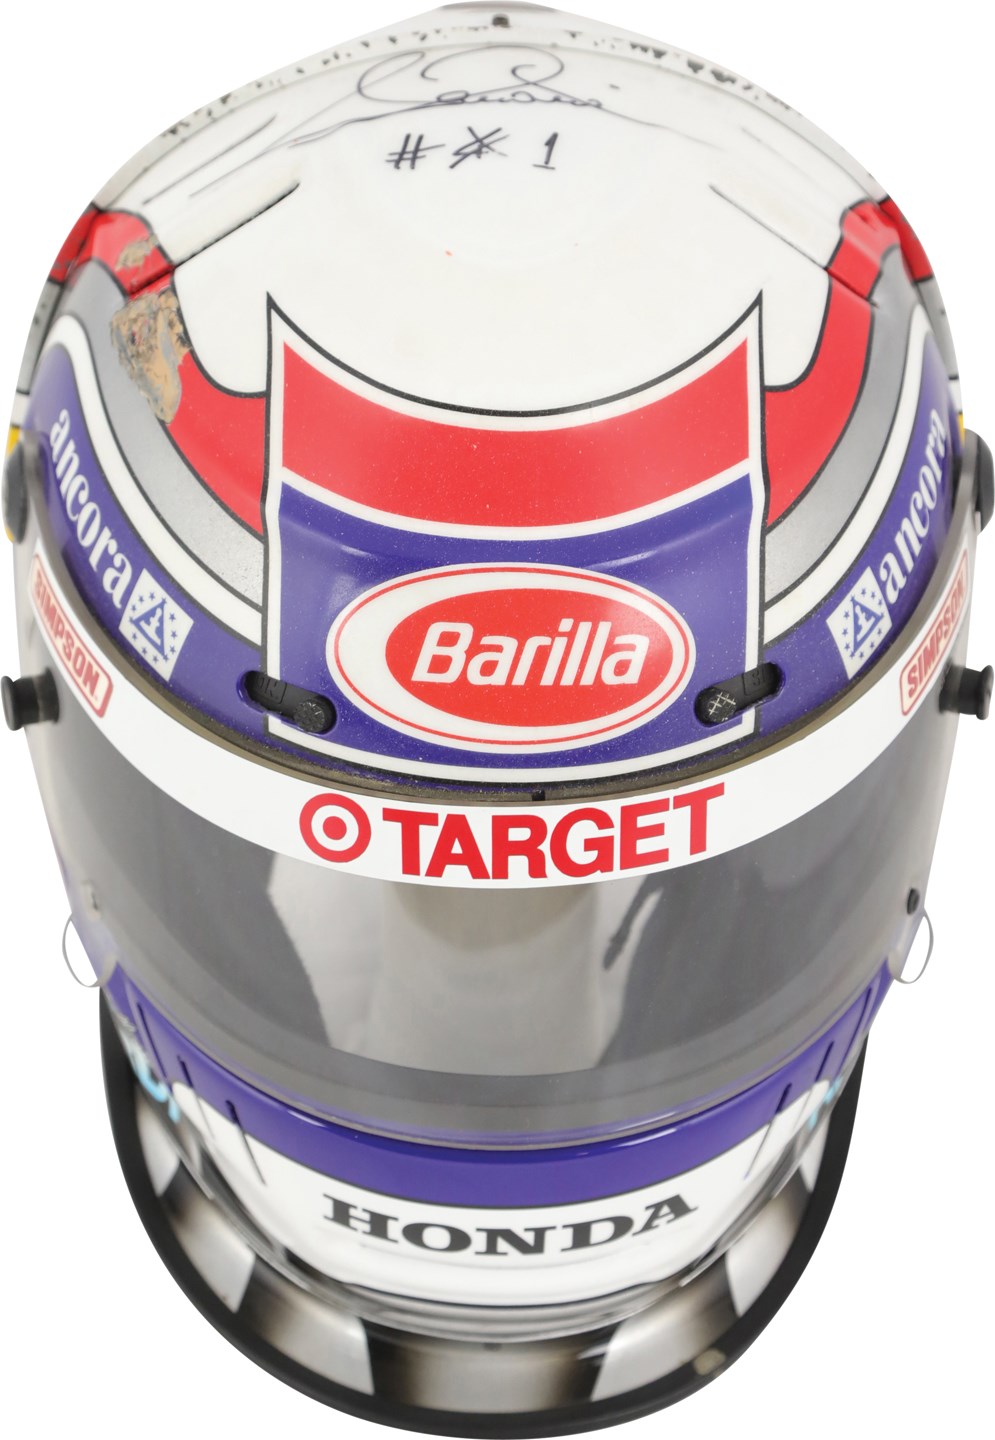 - 1997 Alex Zanardi Signed Race Worn Helmet from Marlboro 500 Crash - His Last Helmet of Points Leading Season